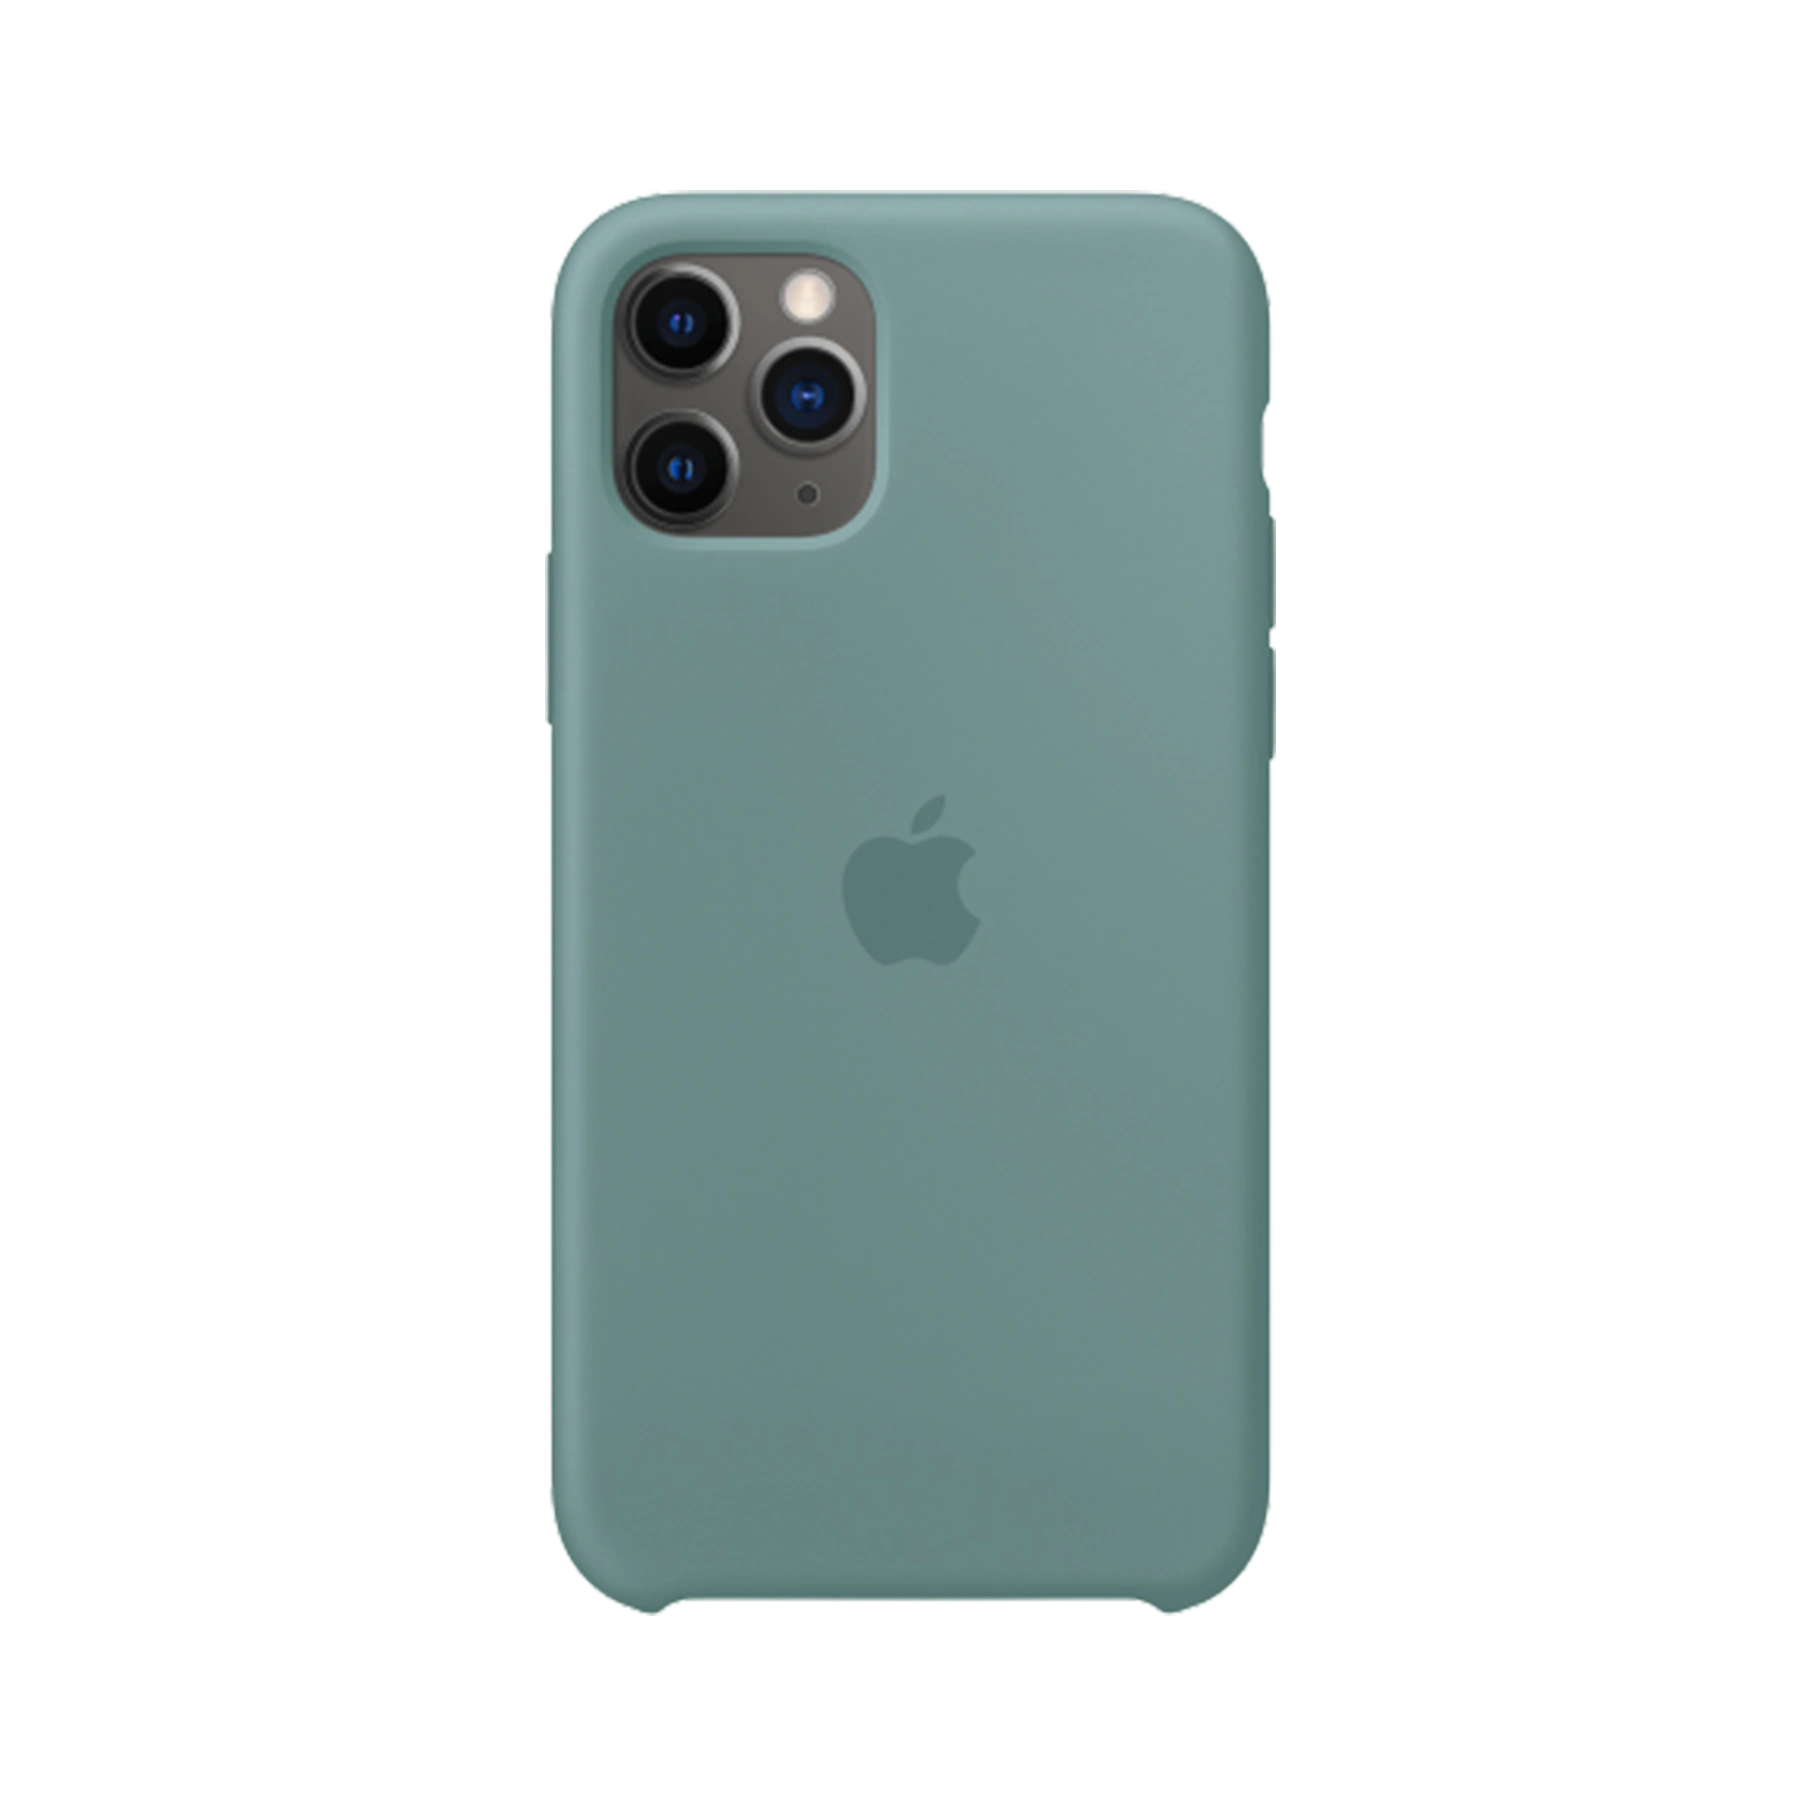 HC iPhone 11 Pro Max Silicone Case